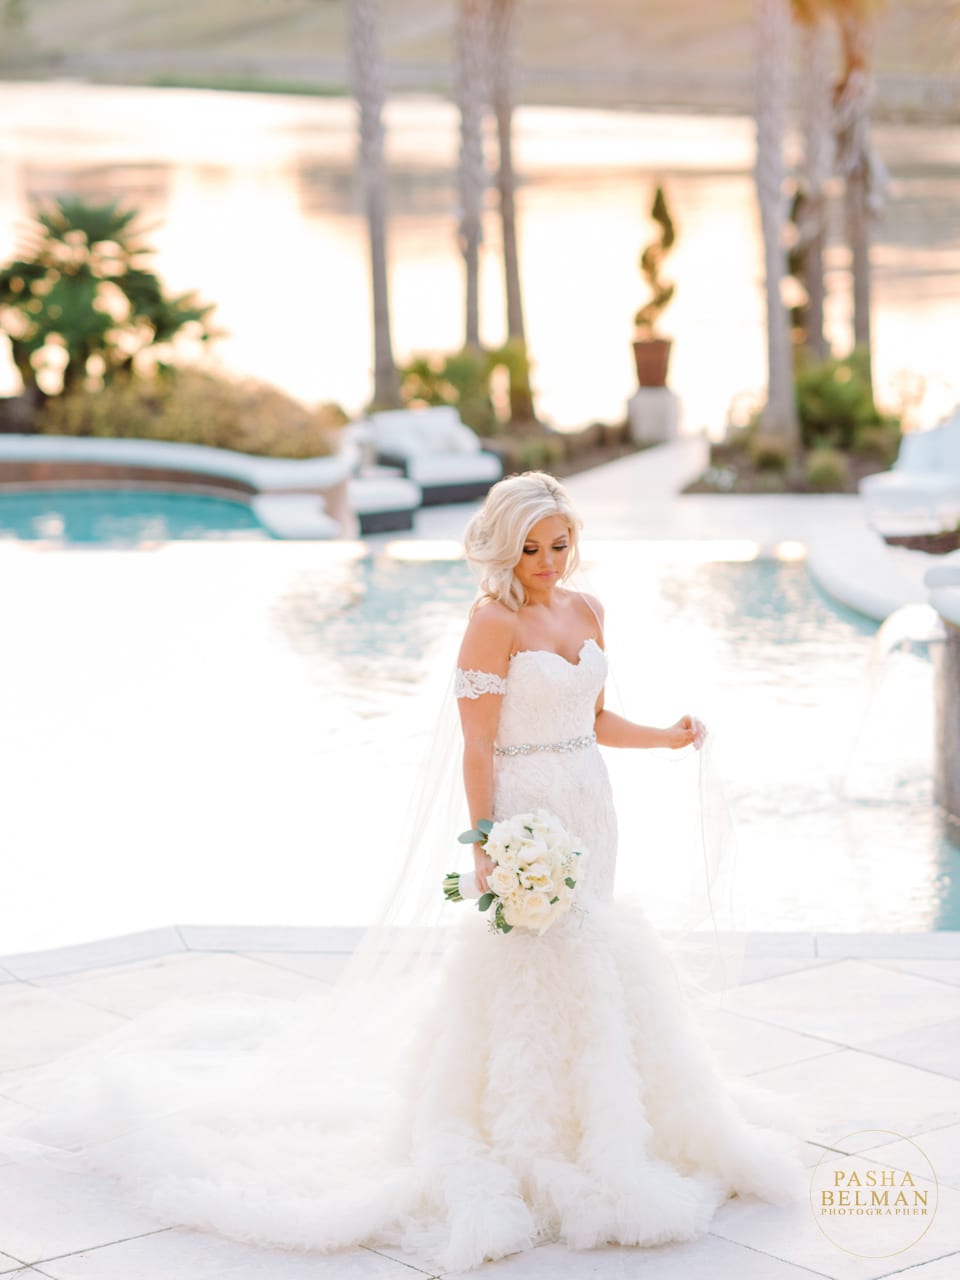 A Gorgeous Bride - Amazing Bridal photos in Myrtle Beach, SC